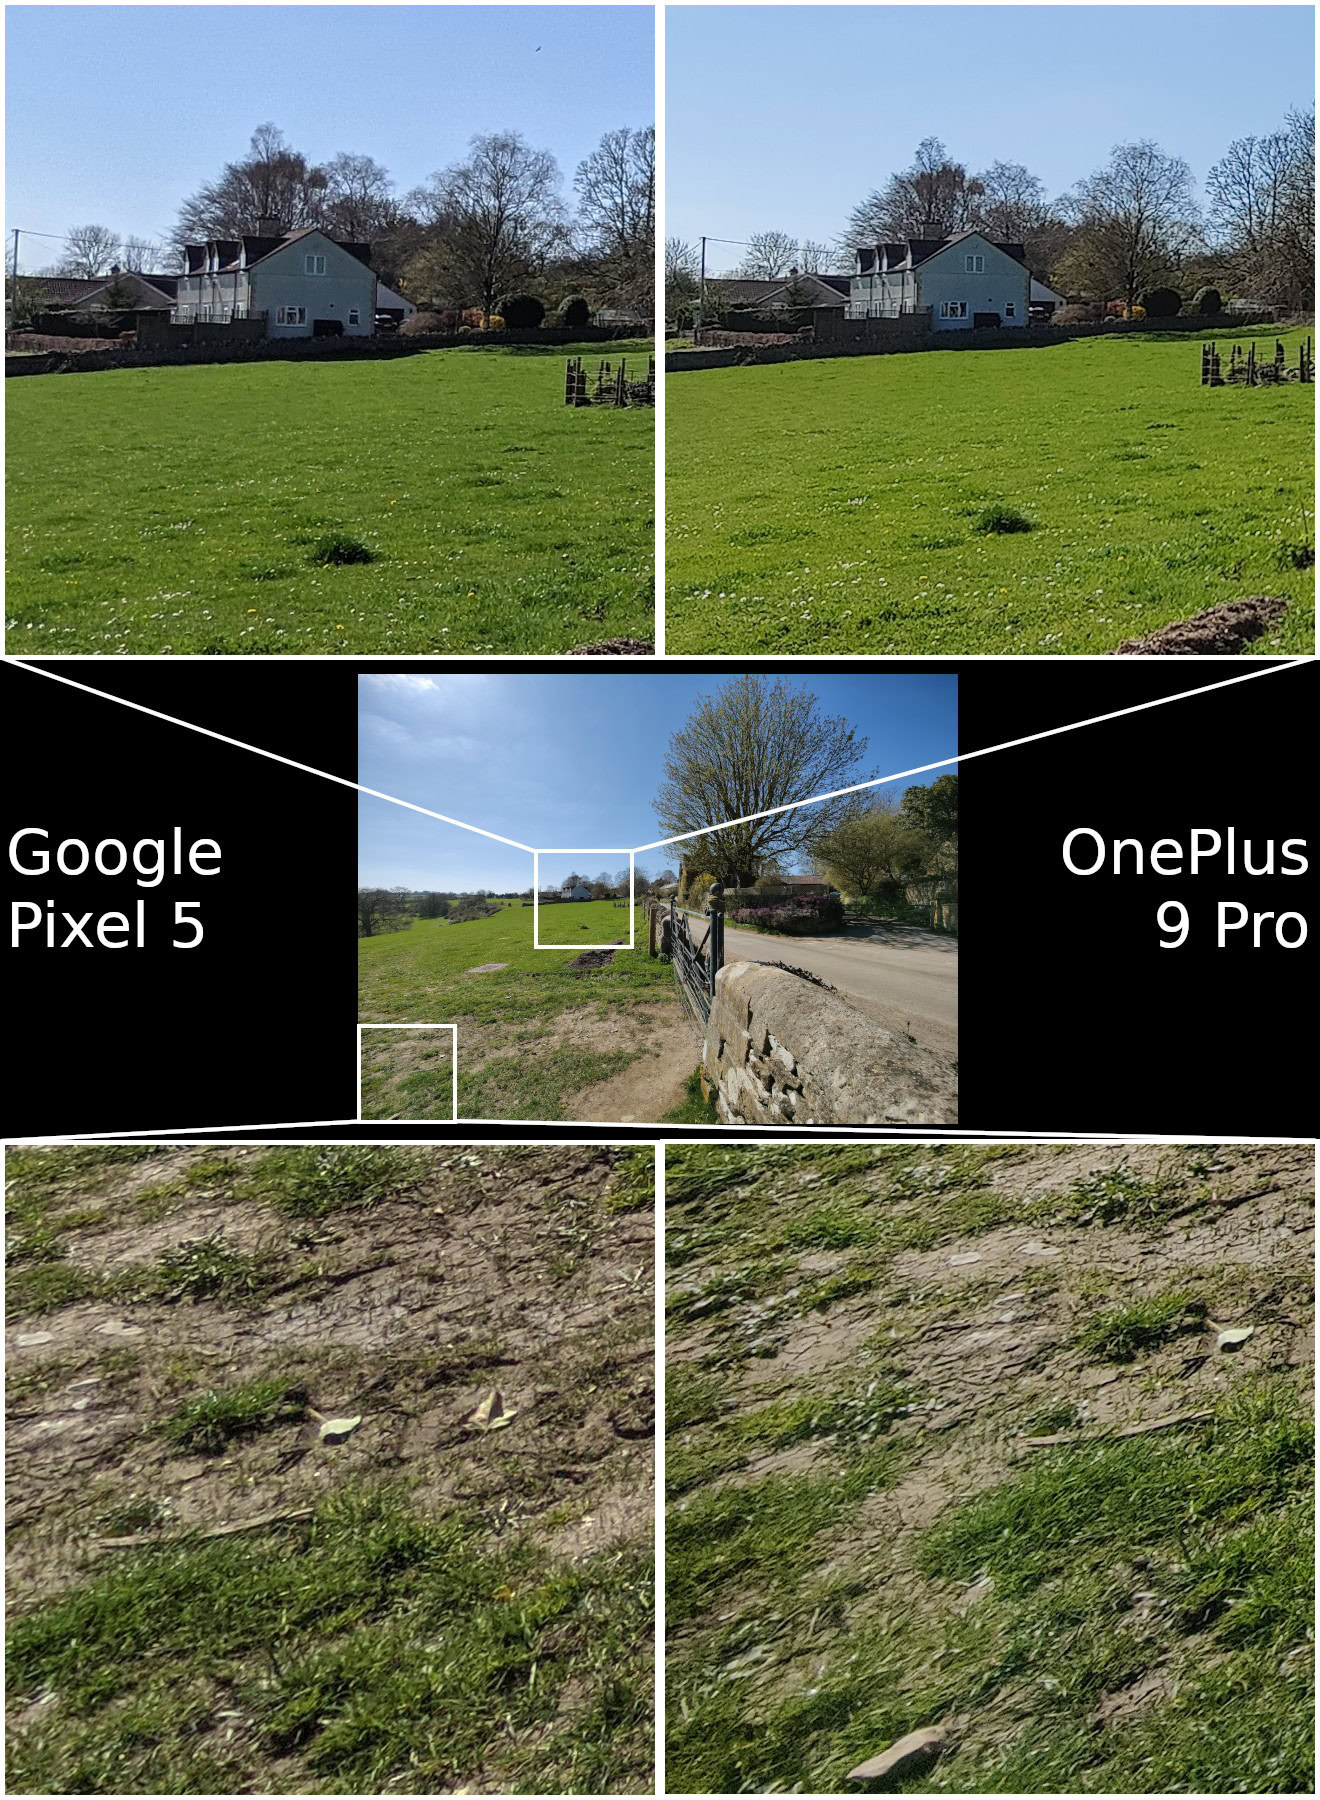 Google Pixel 5 vs OnePlus 9 Pro wide